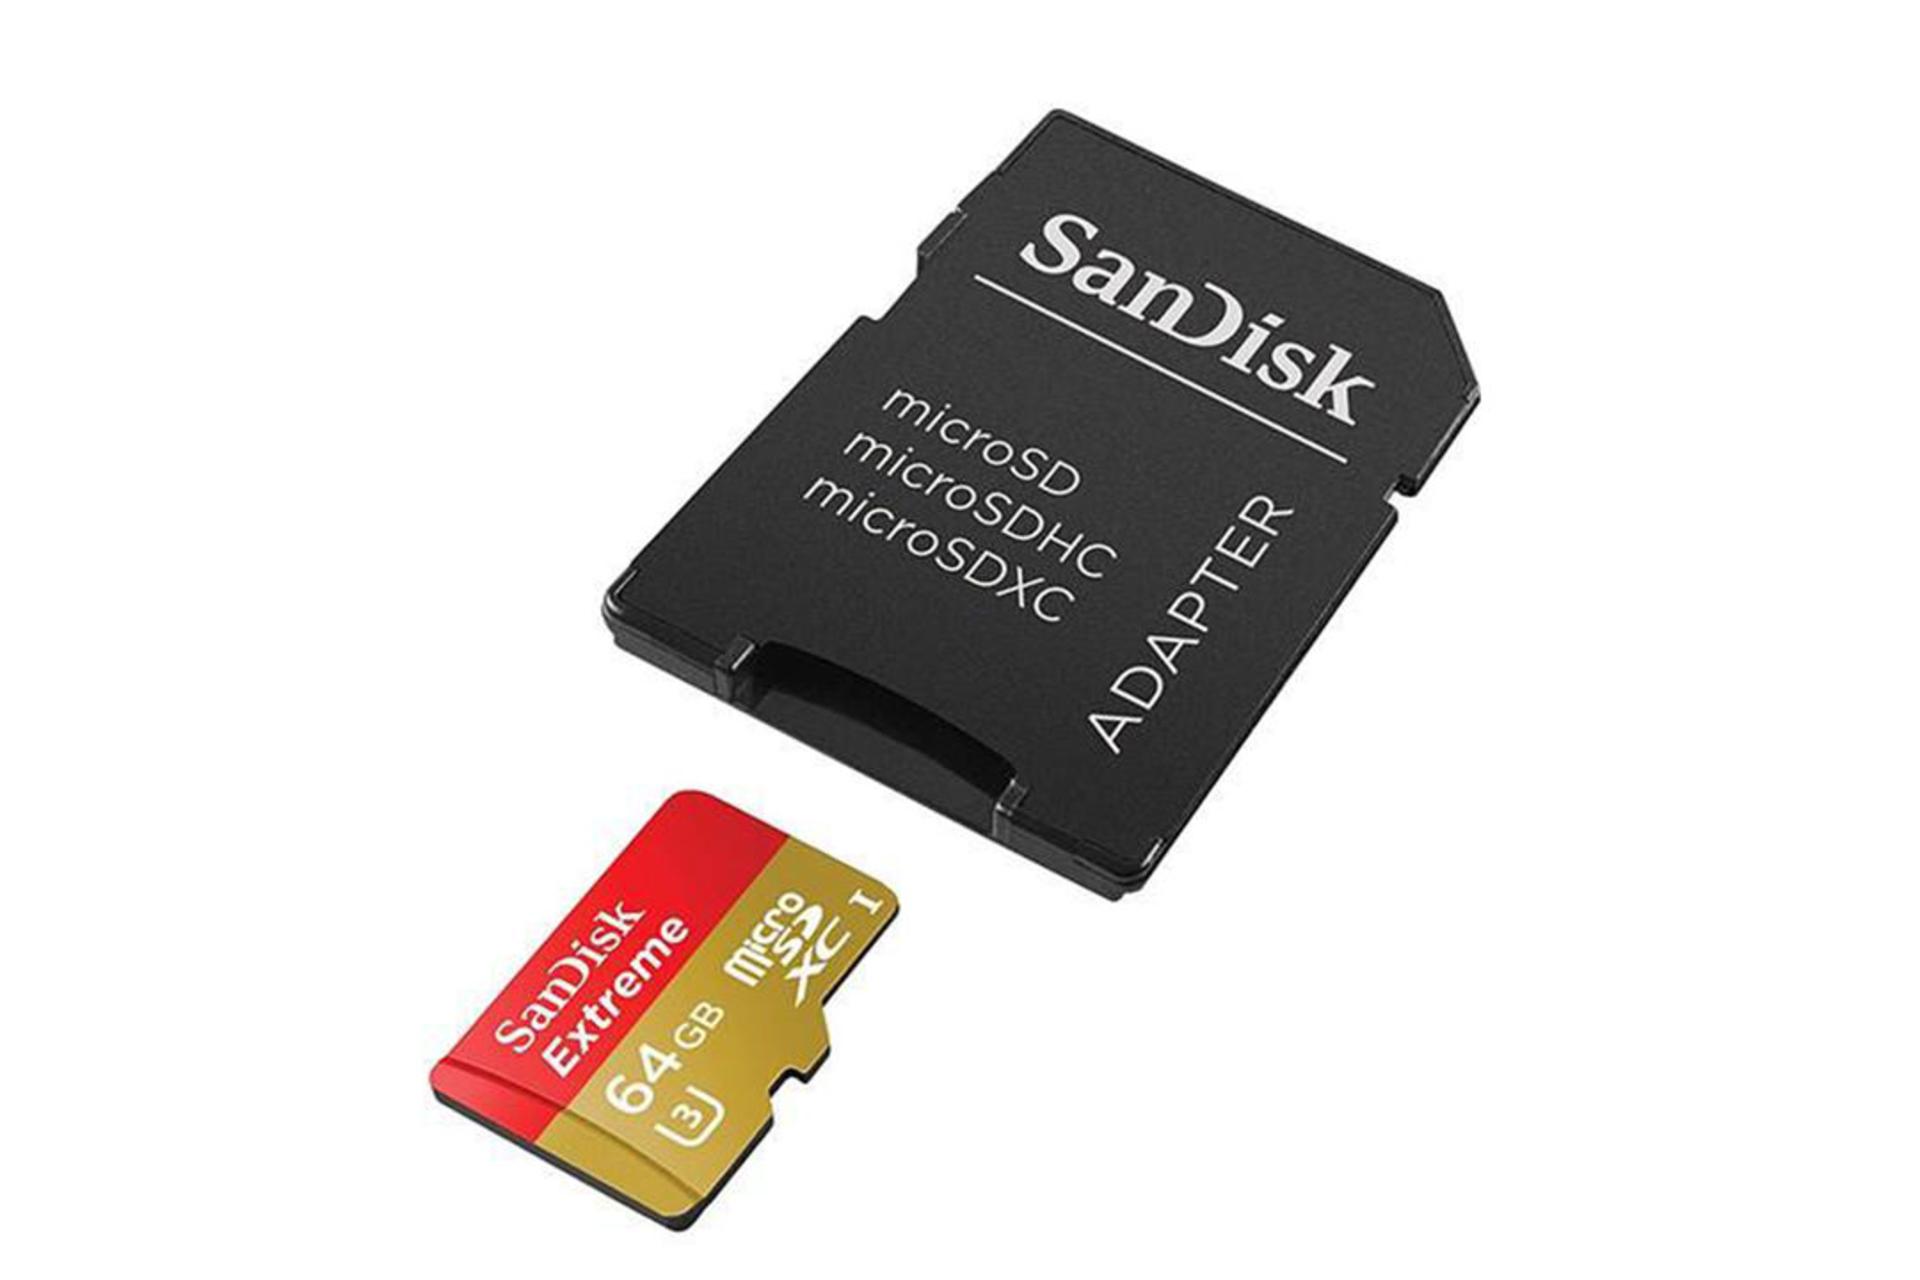 SanDisk Extreme microSDXC Class 10 UHS-I U3 64GB